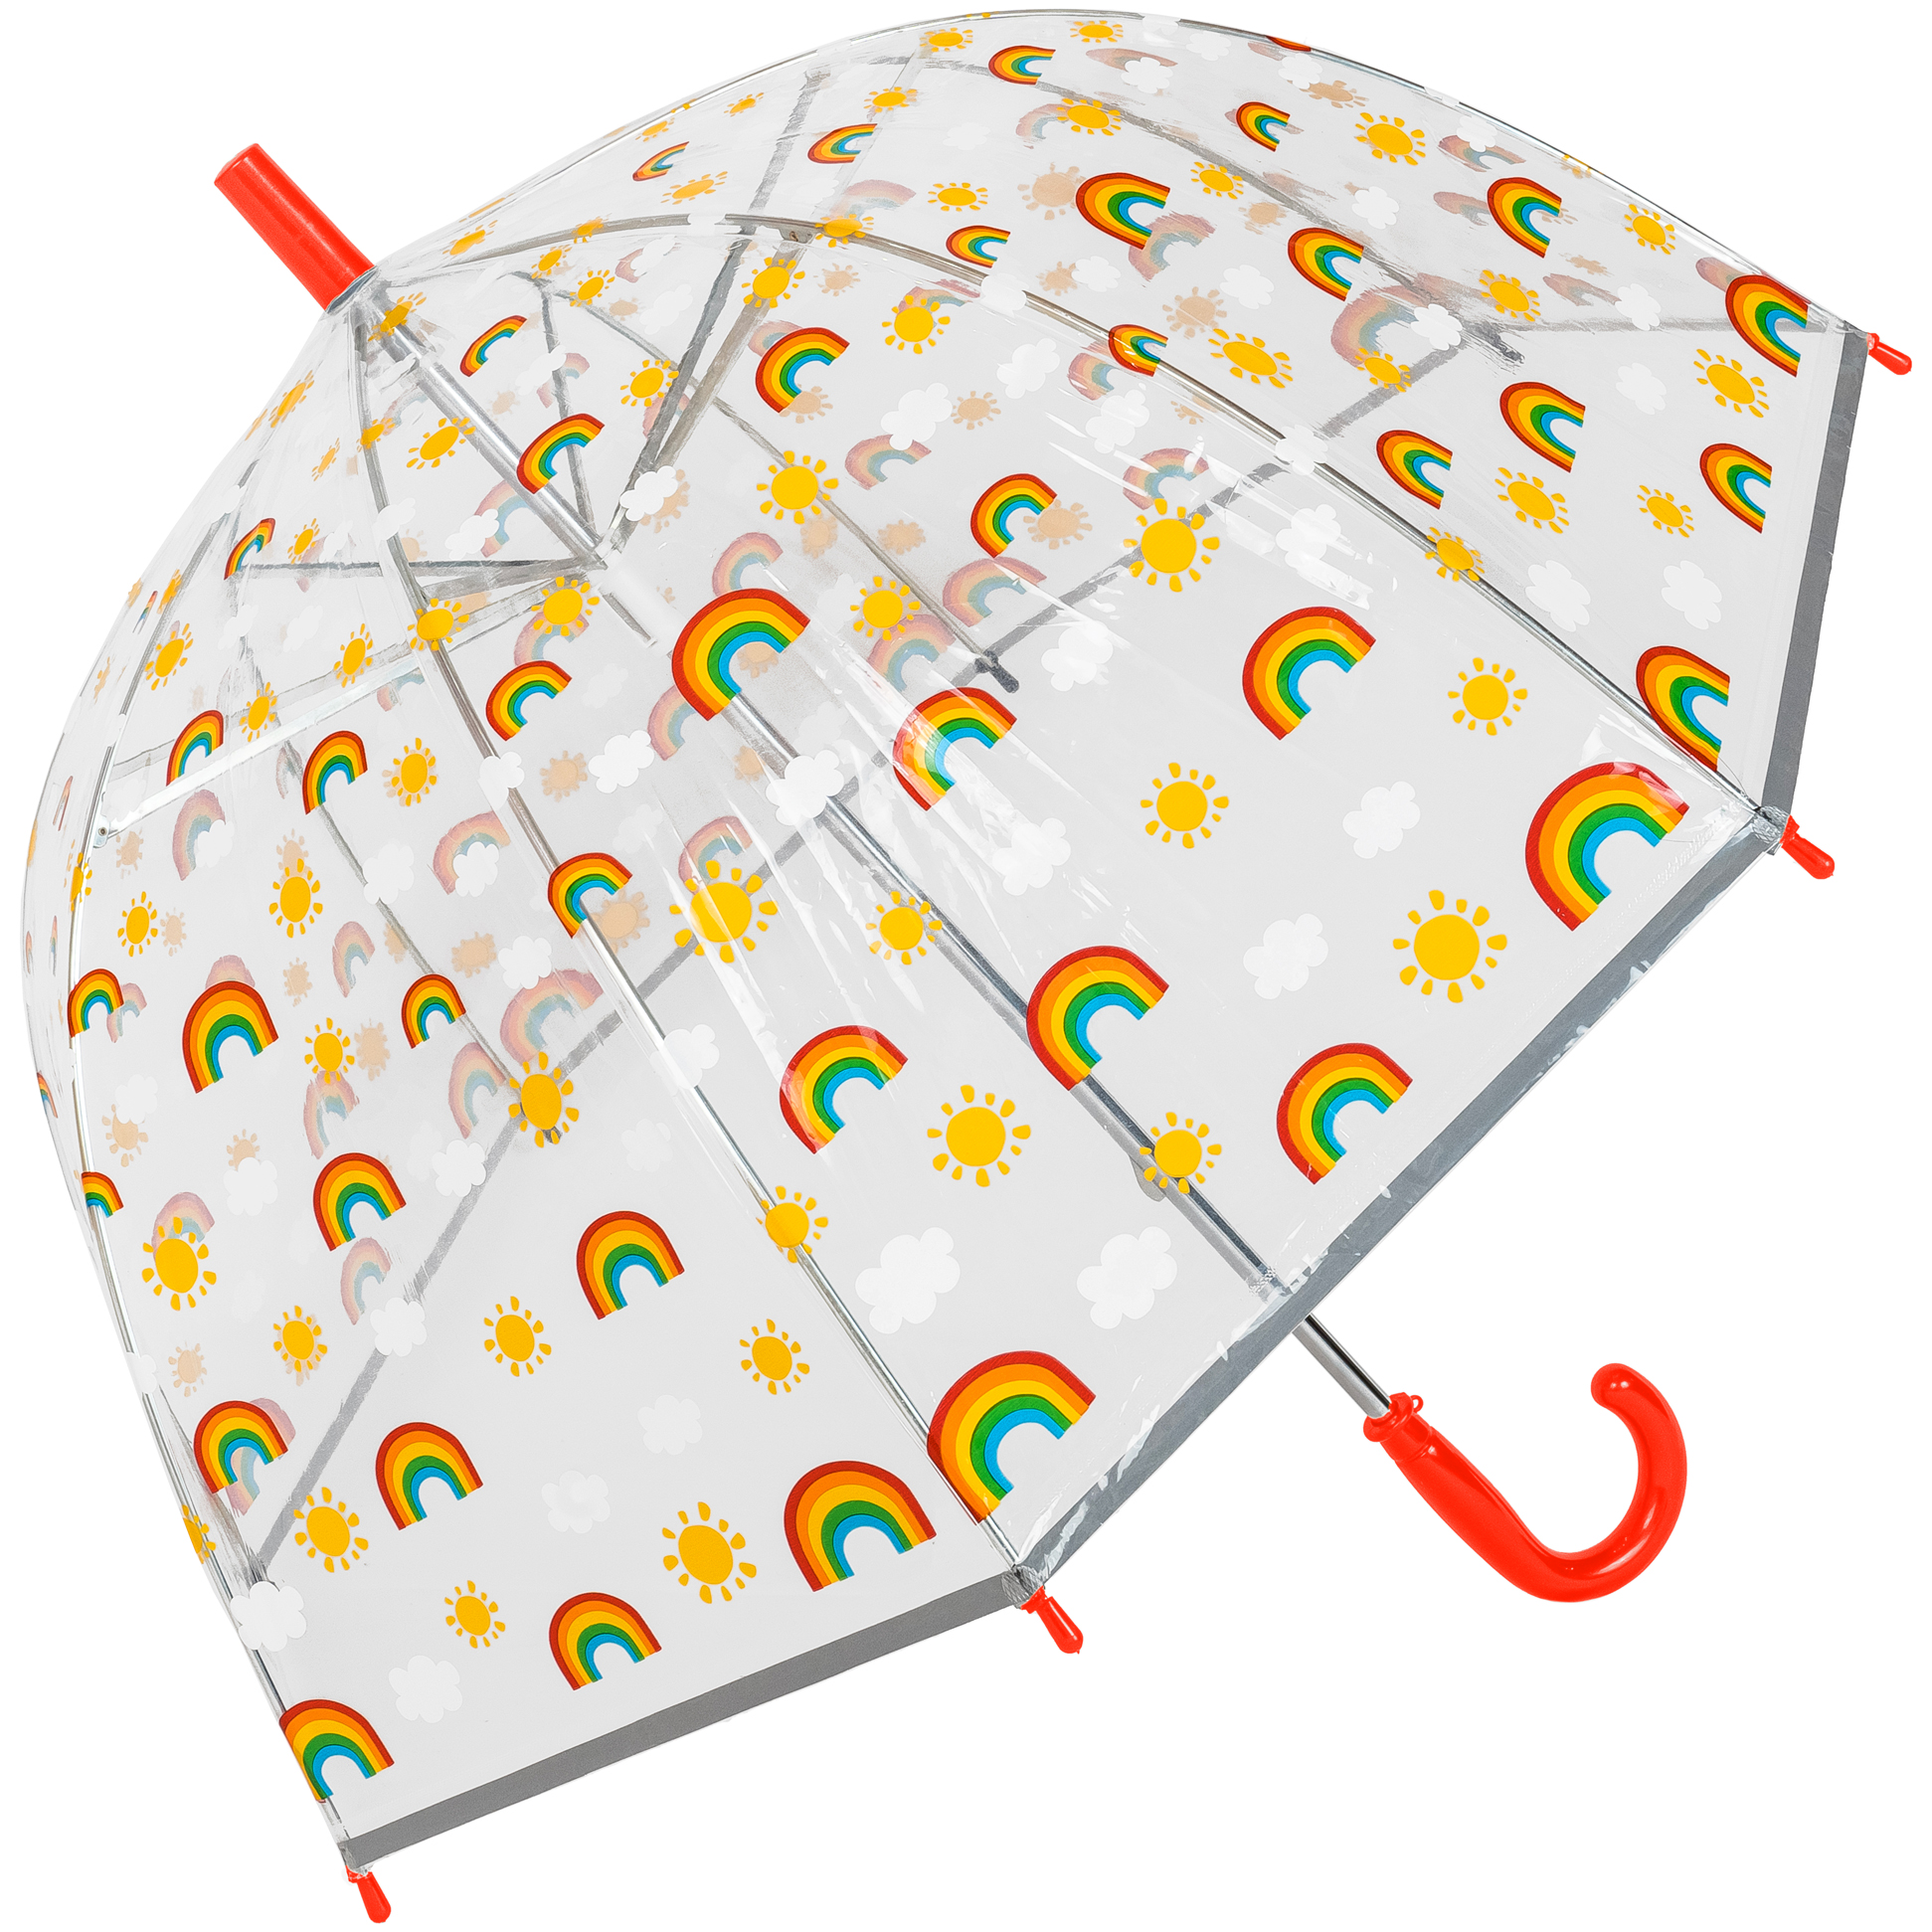 The First Umbrella has Reflective Stripe SMATI KidsUmbrella Dome Transparent Extra safty to Children in The Darkness